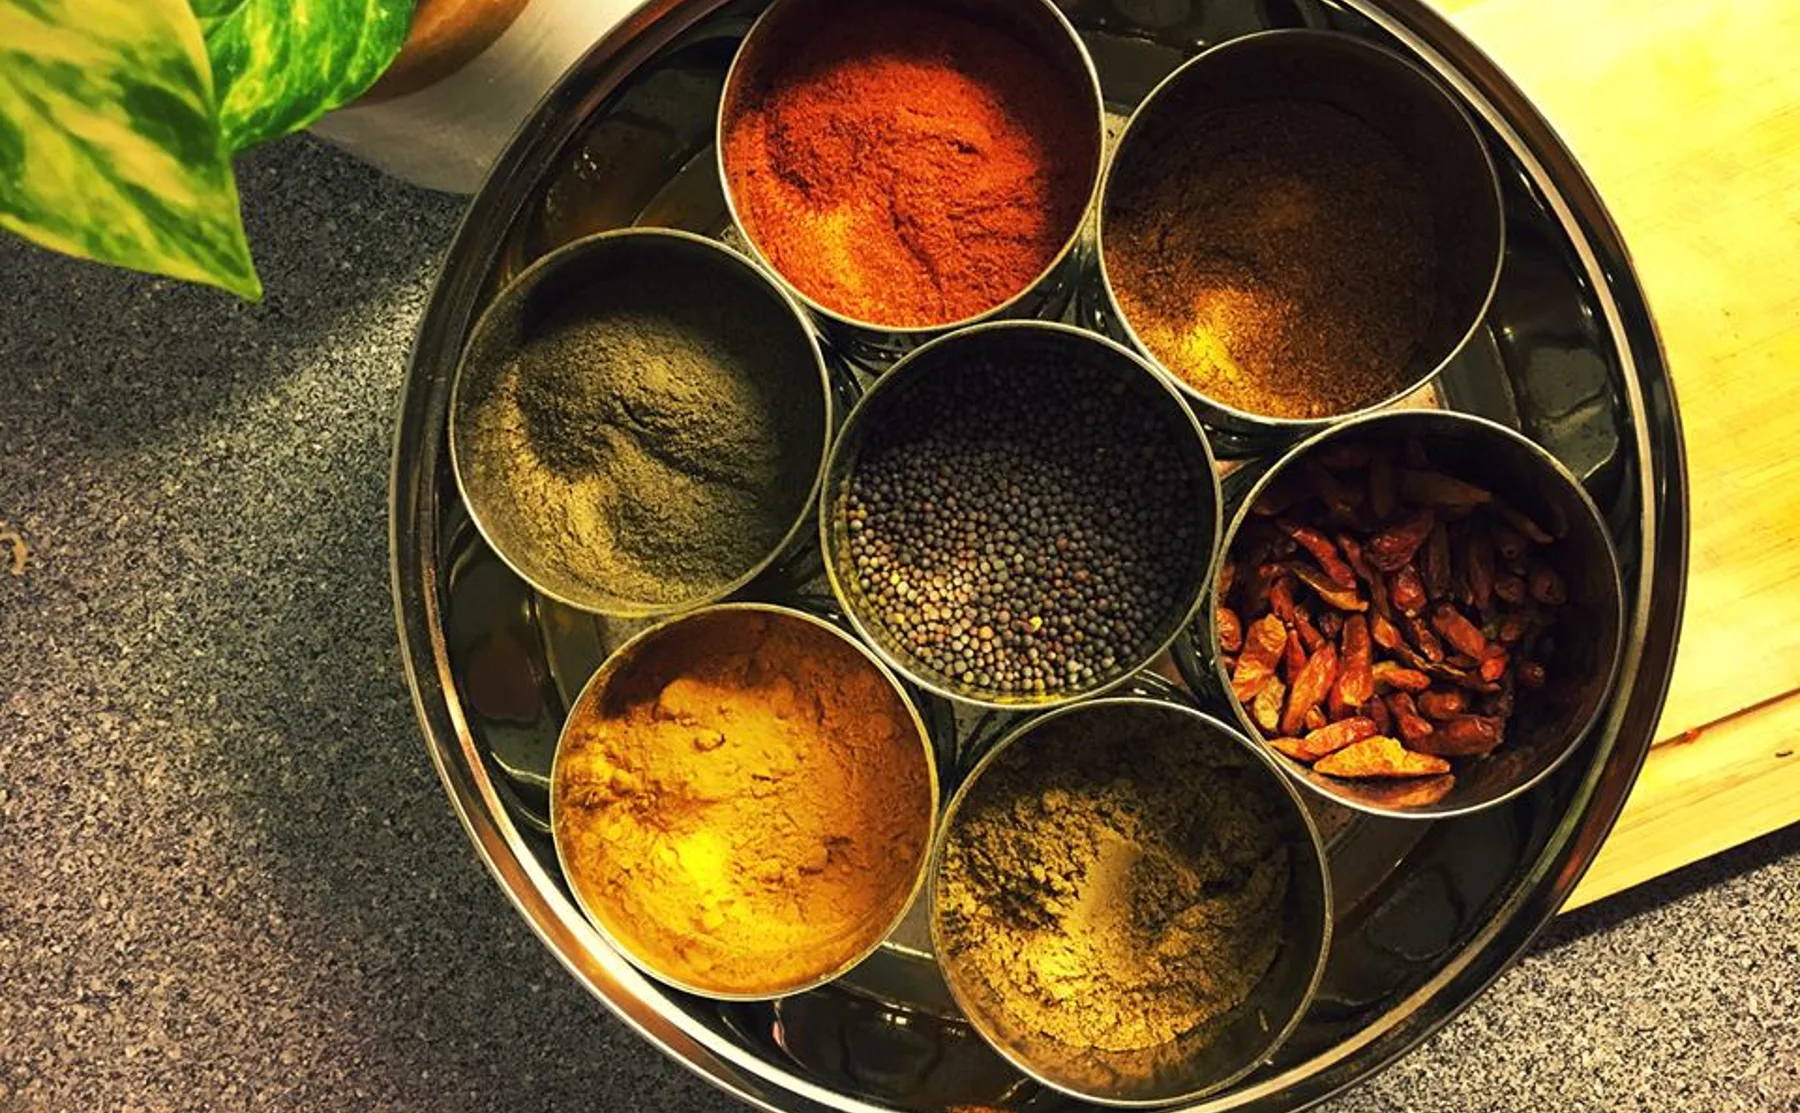 Spice Verandah: Customized Indian Cooking Classes - 982359